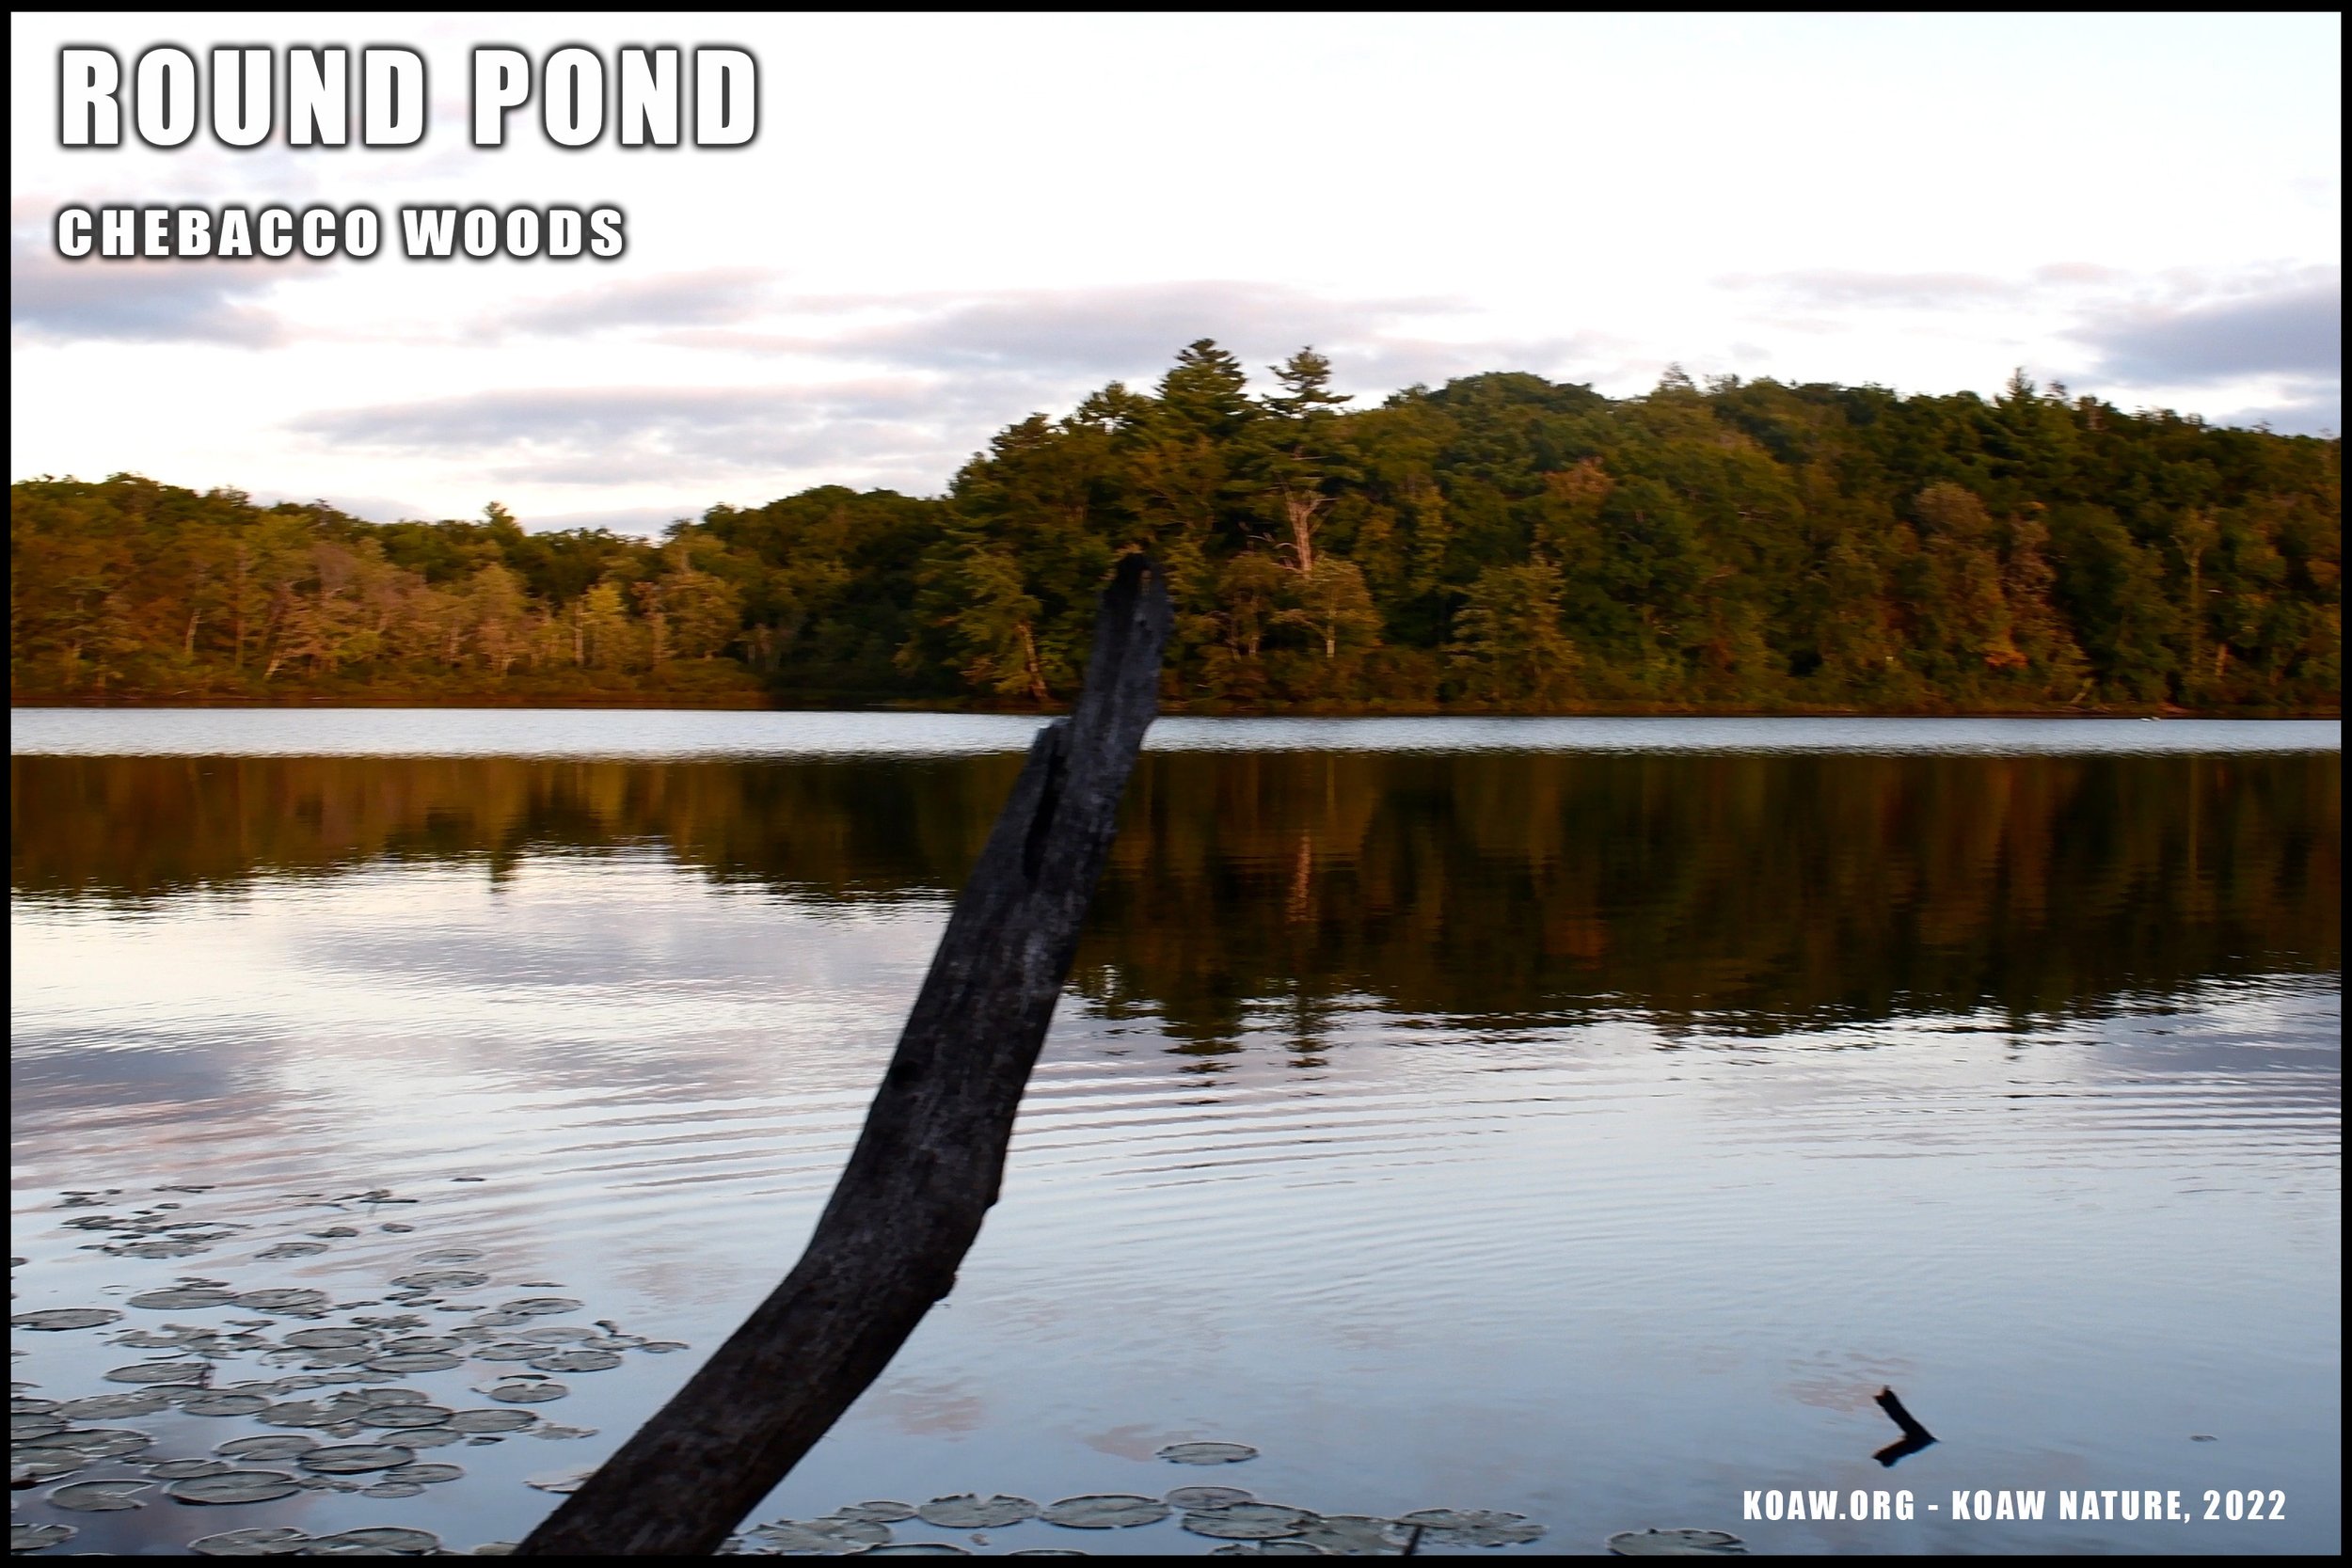 Round Pond at Chebacco Woods